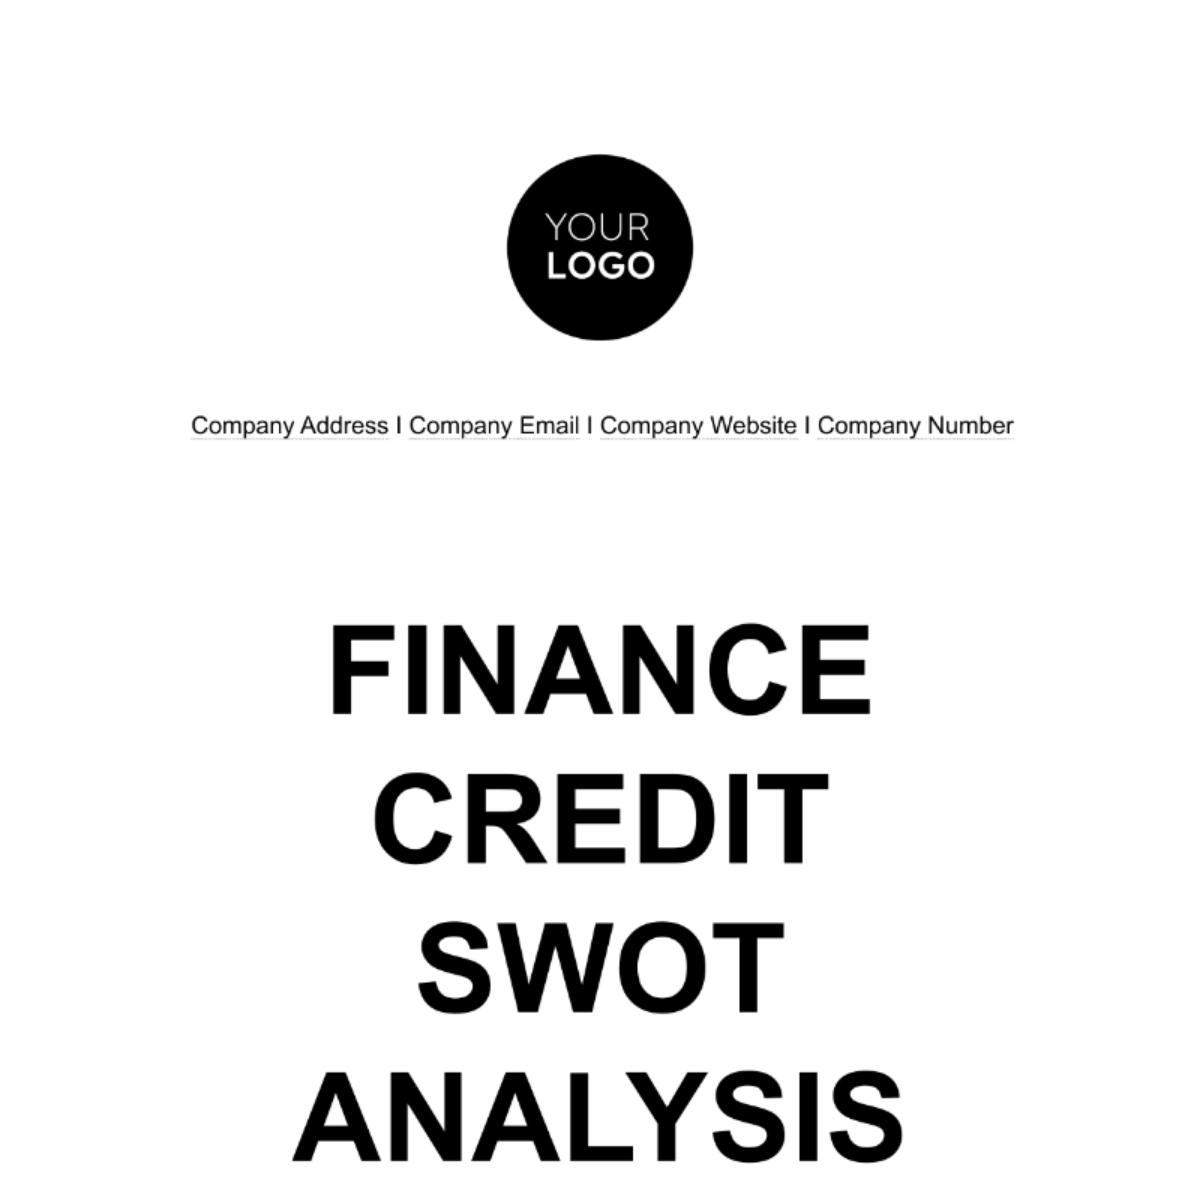 Finance Credit SWOT Analysis Template